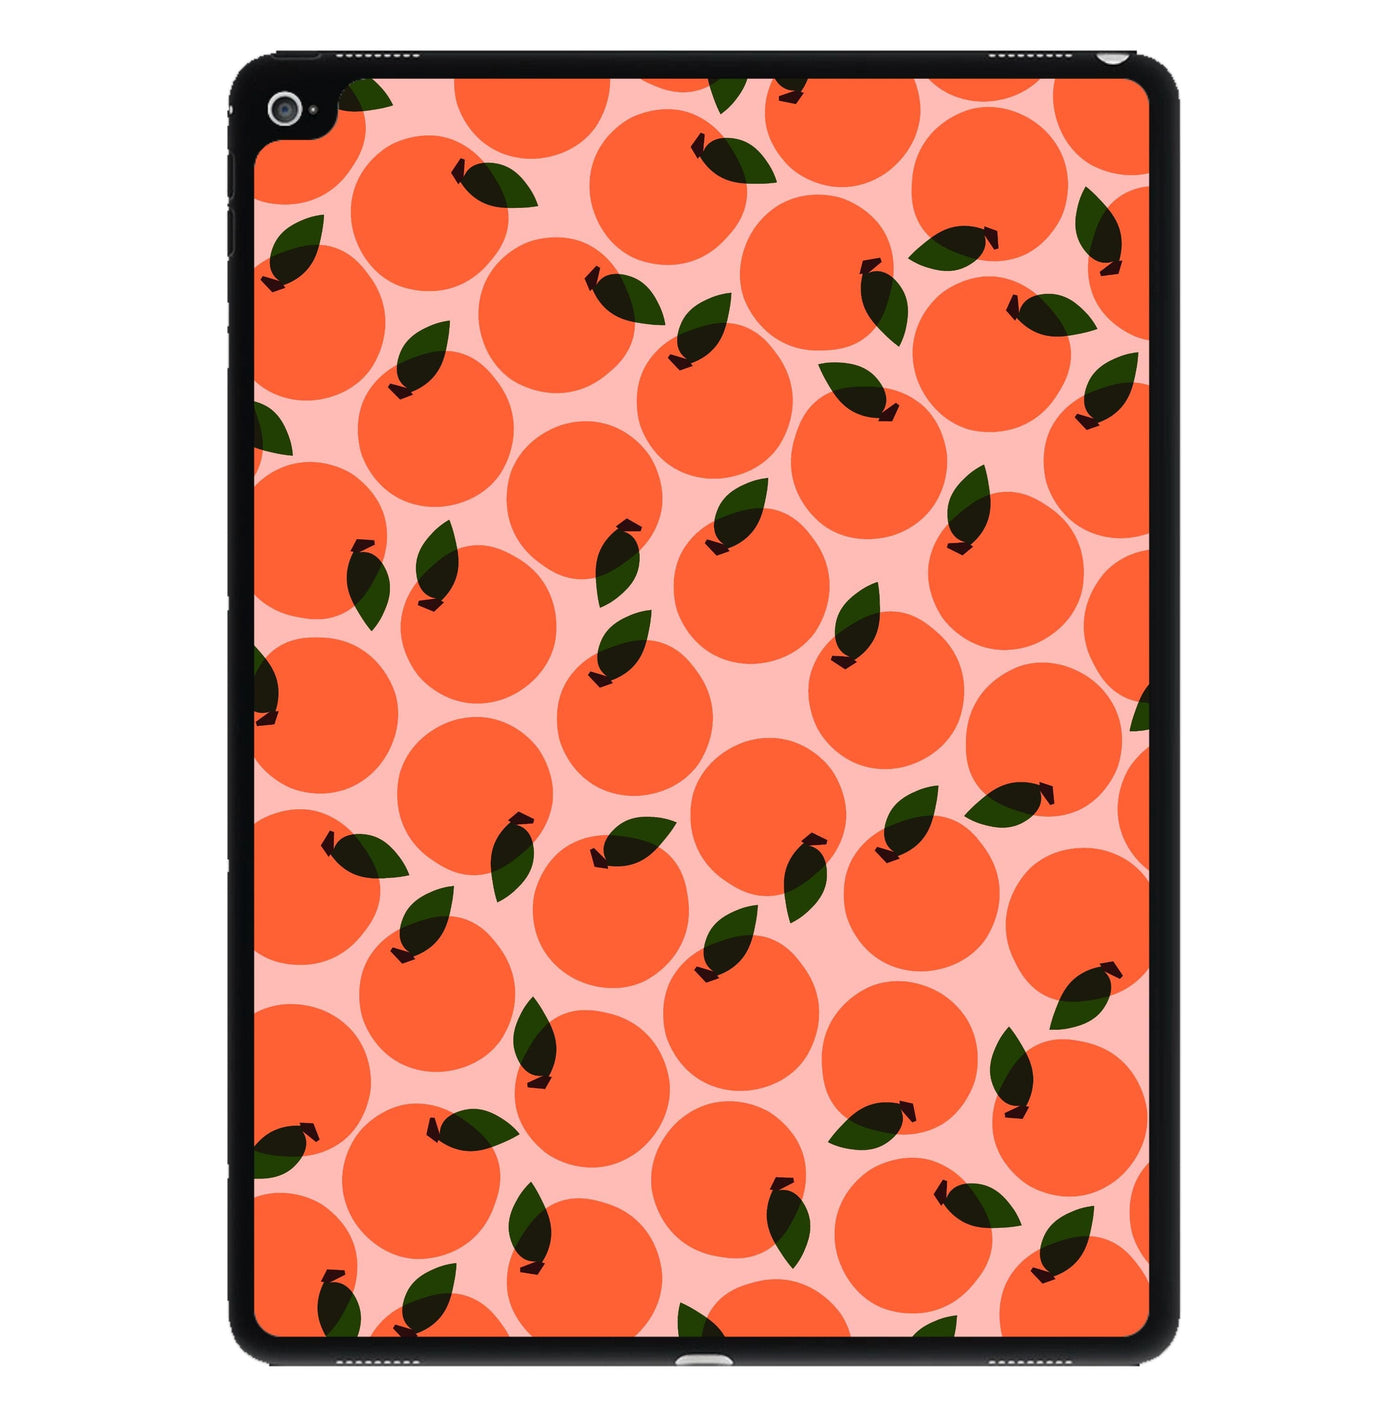 Oranges - Fruit Patterns iPad Case